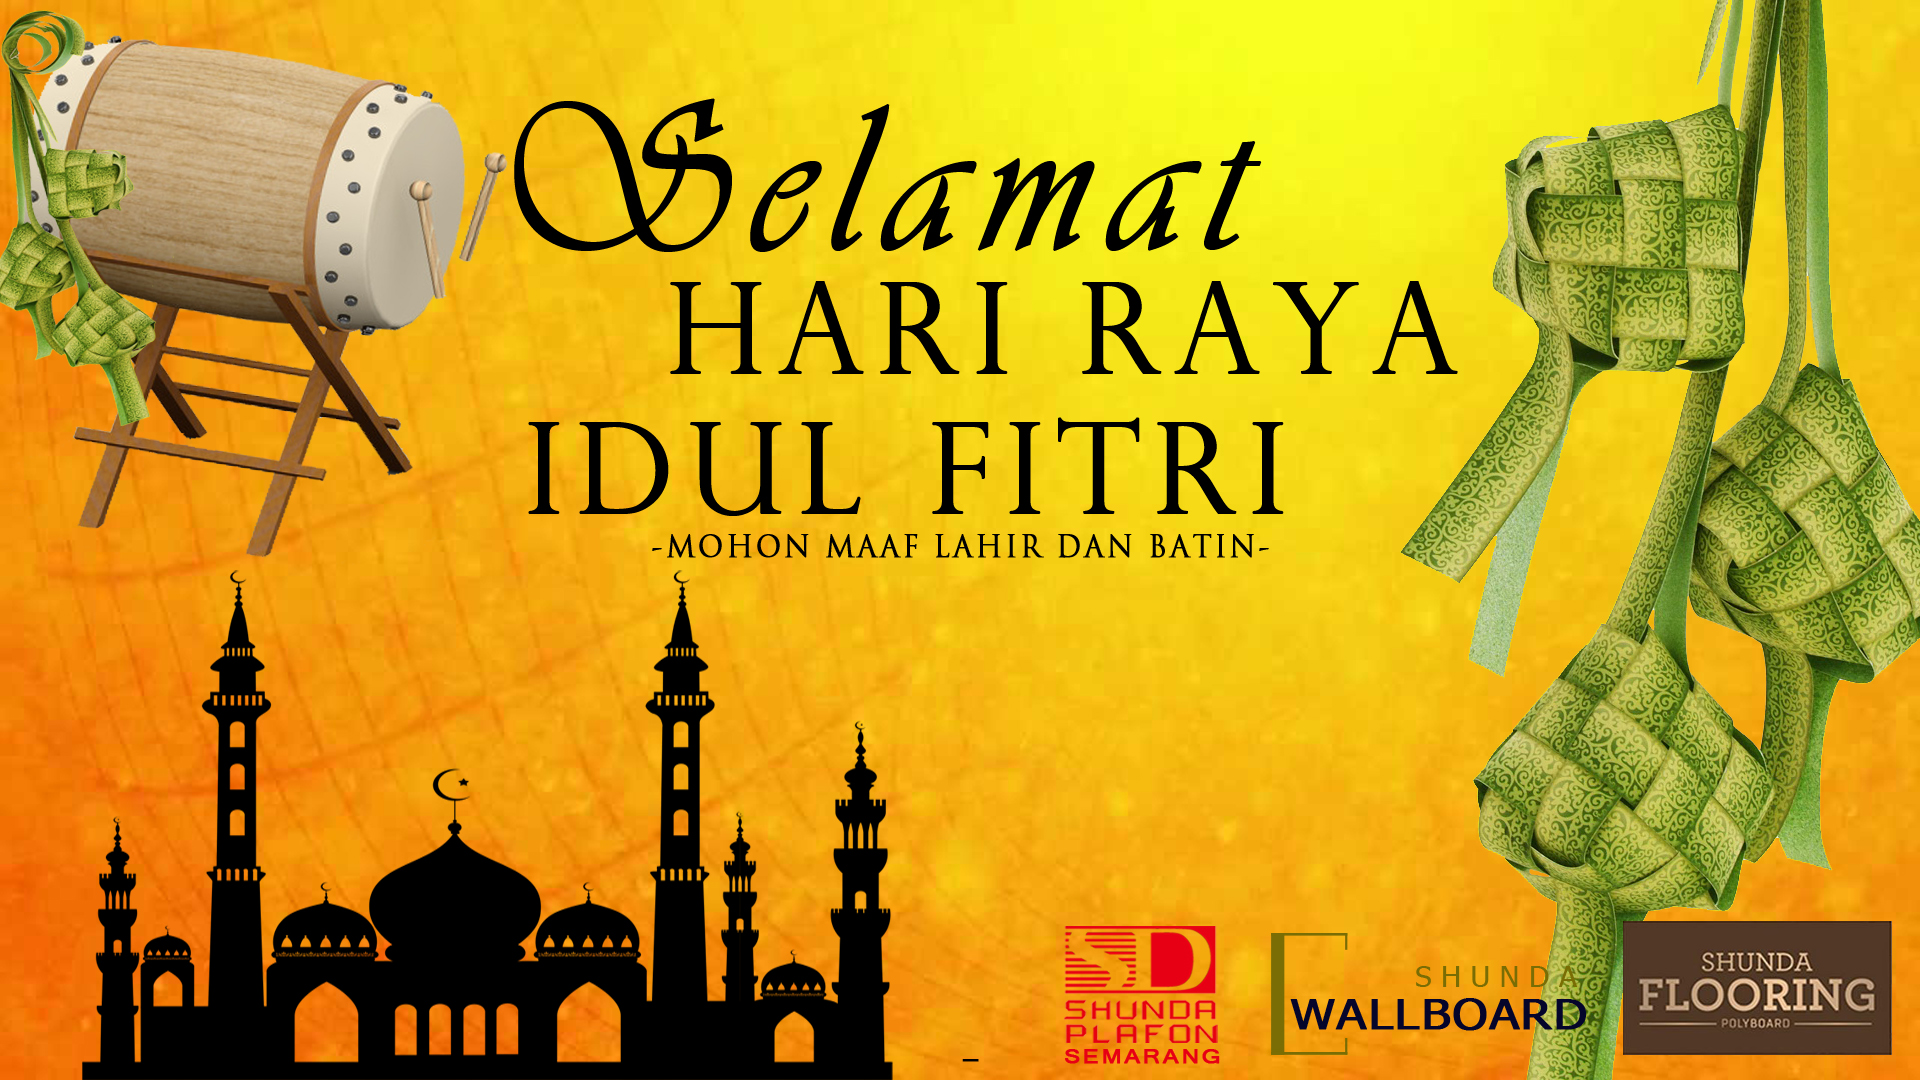 Read more about the article Selamat Hari Raya Idul Fitri